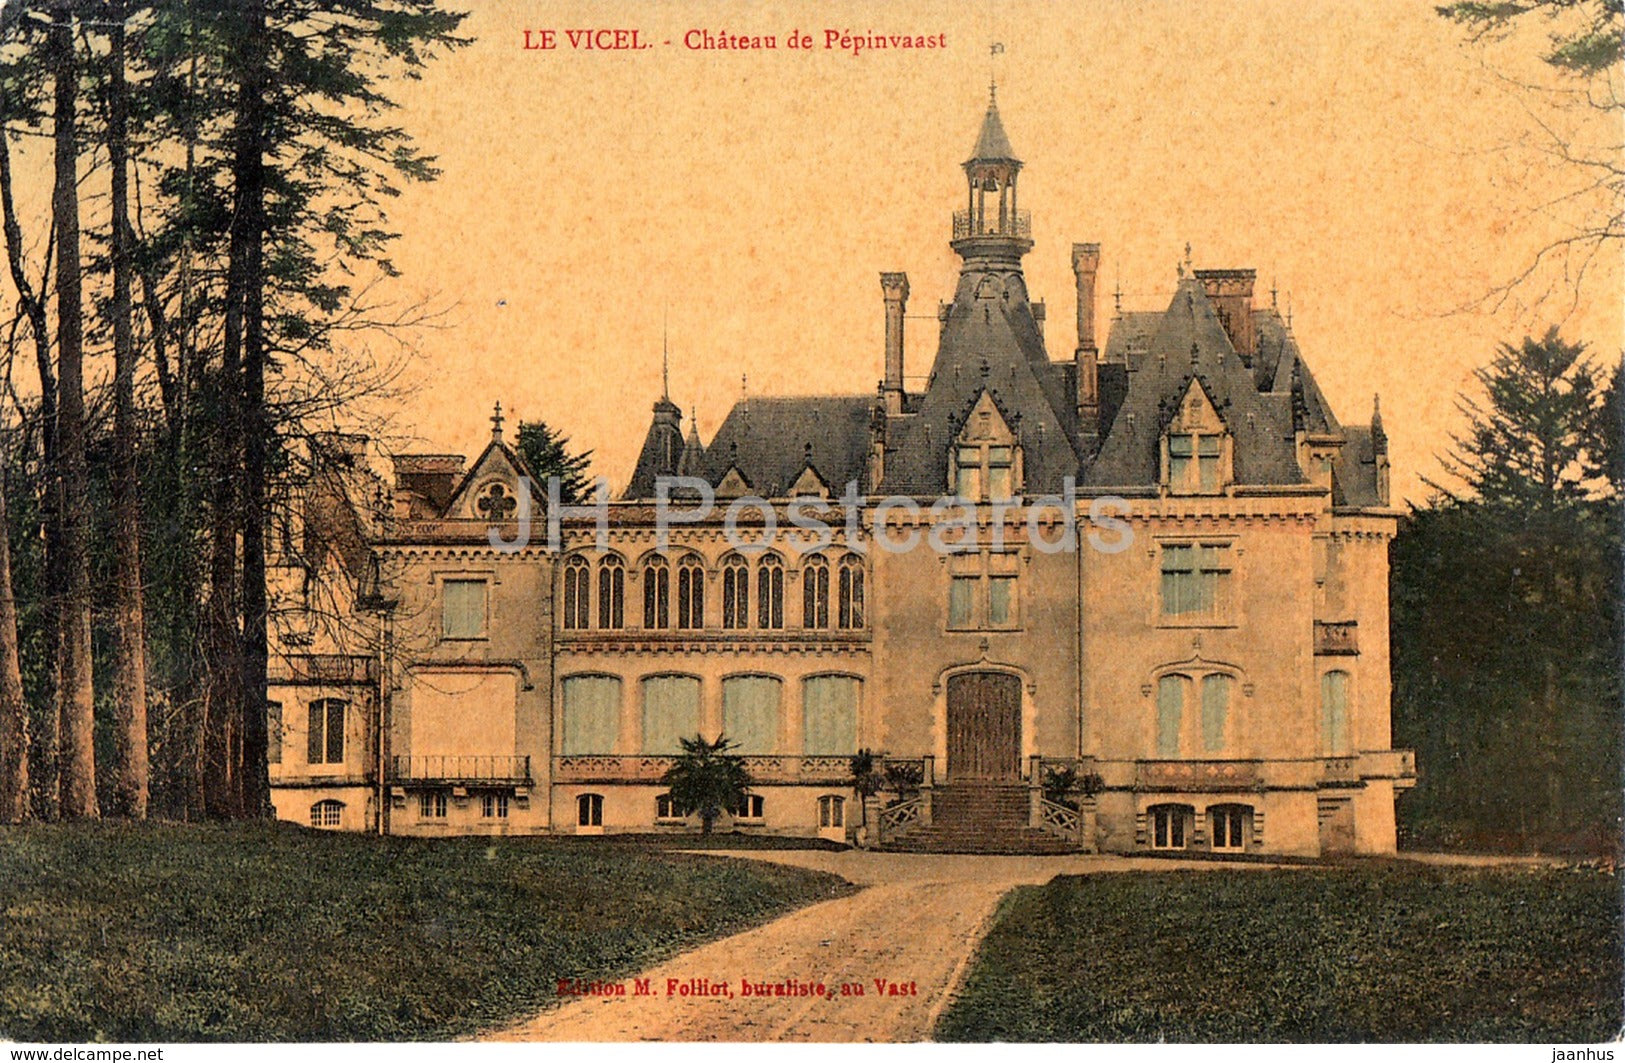 Le Vicel - Chateau de Pepinvast - castle - old postcard - France - unused - JH Postcards